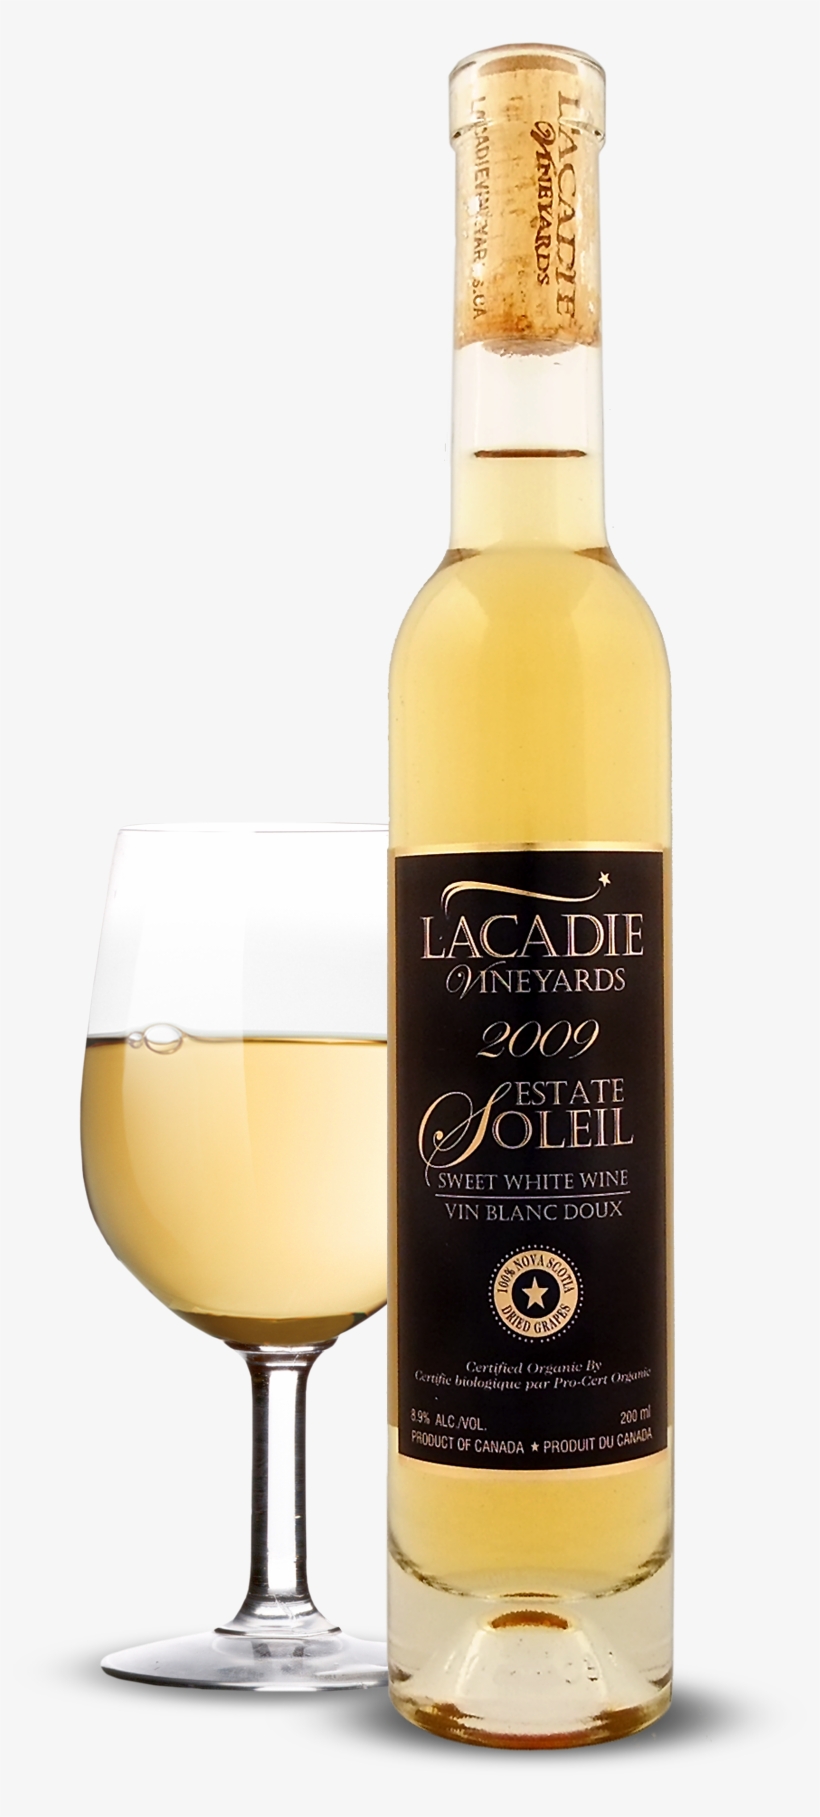 Lacestatesoleil2009 - Wine Glass, transparent png #5705431